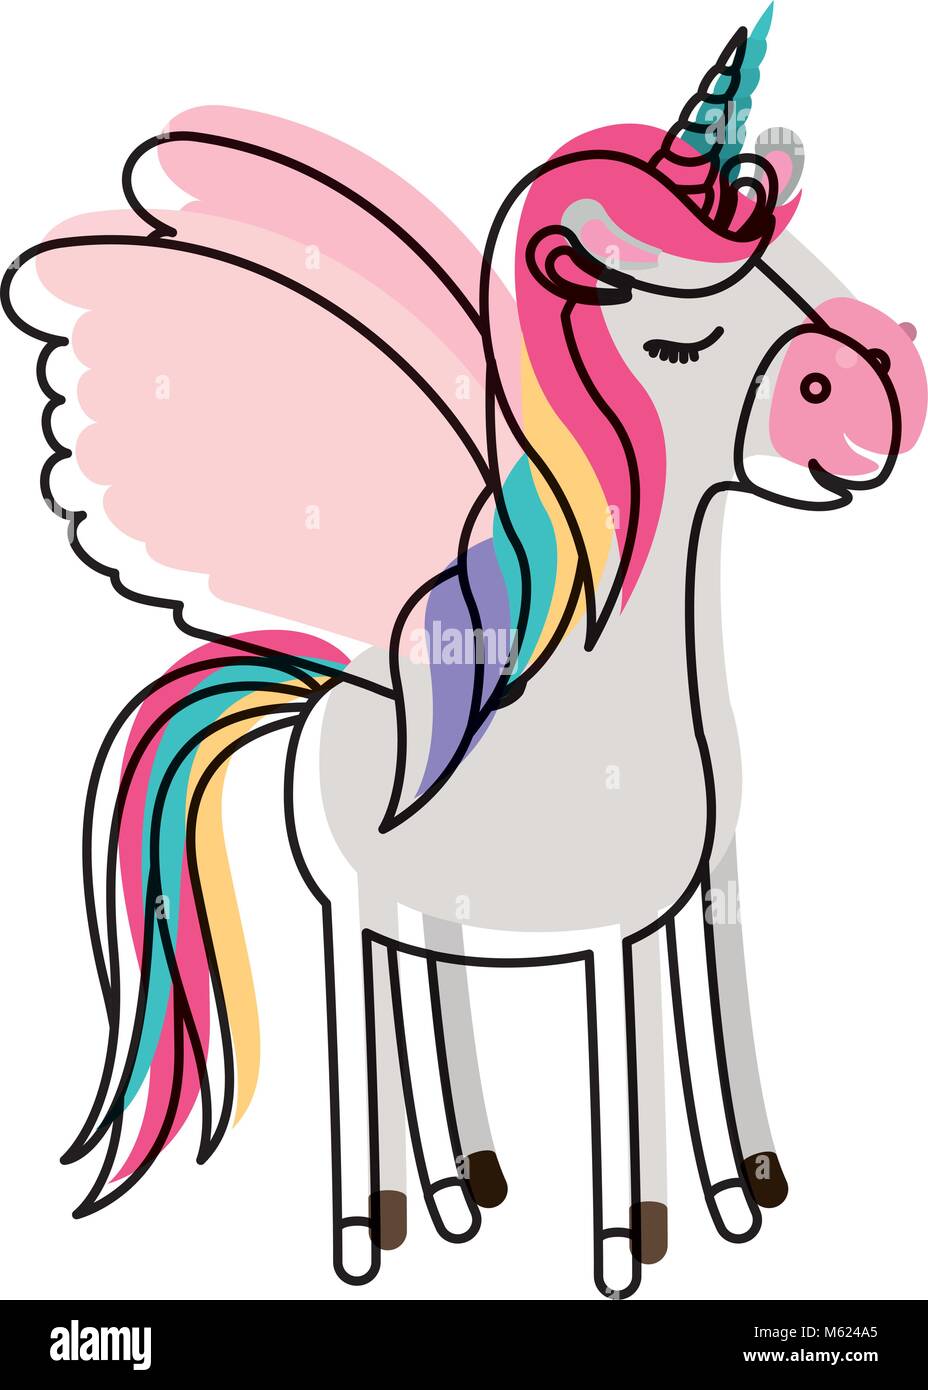 Lindo unicornio kawaii personaje Imagen Vector de stock - Alamy